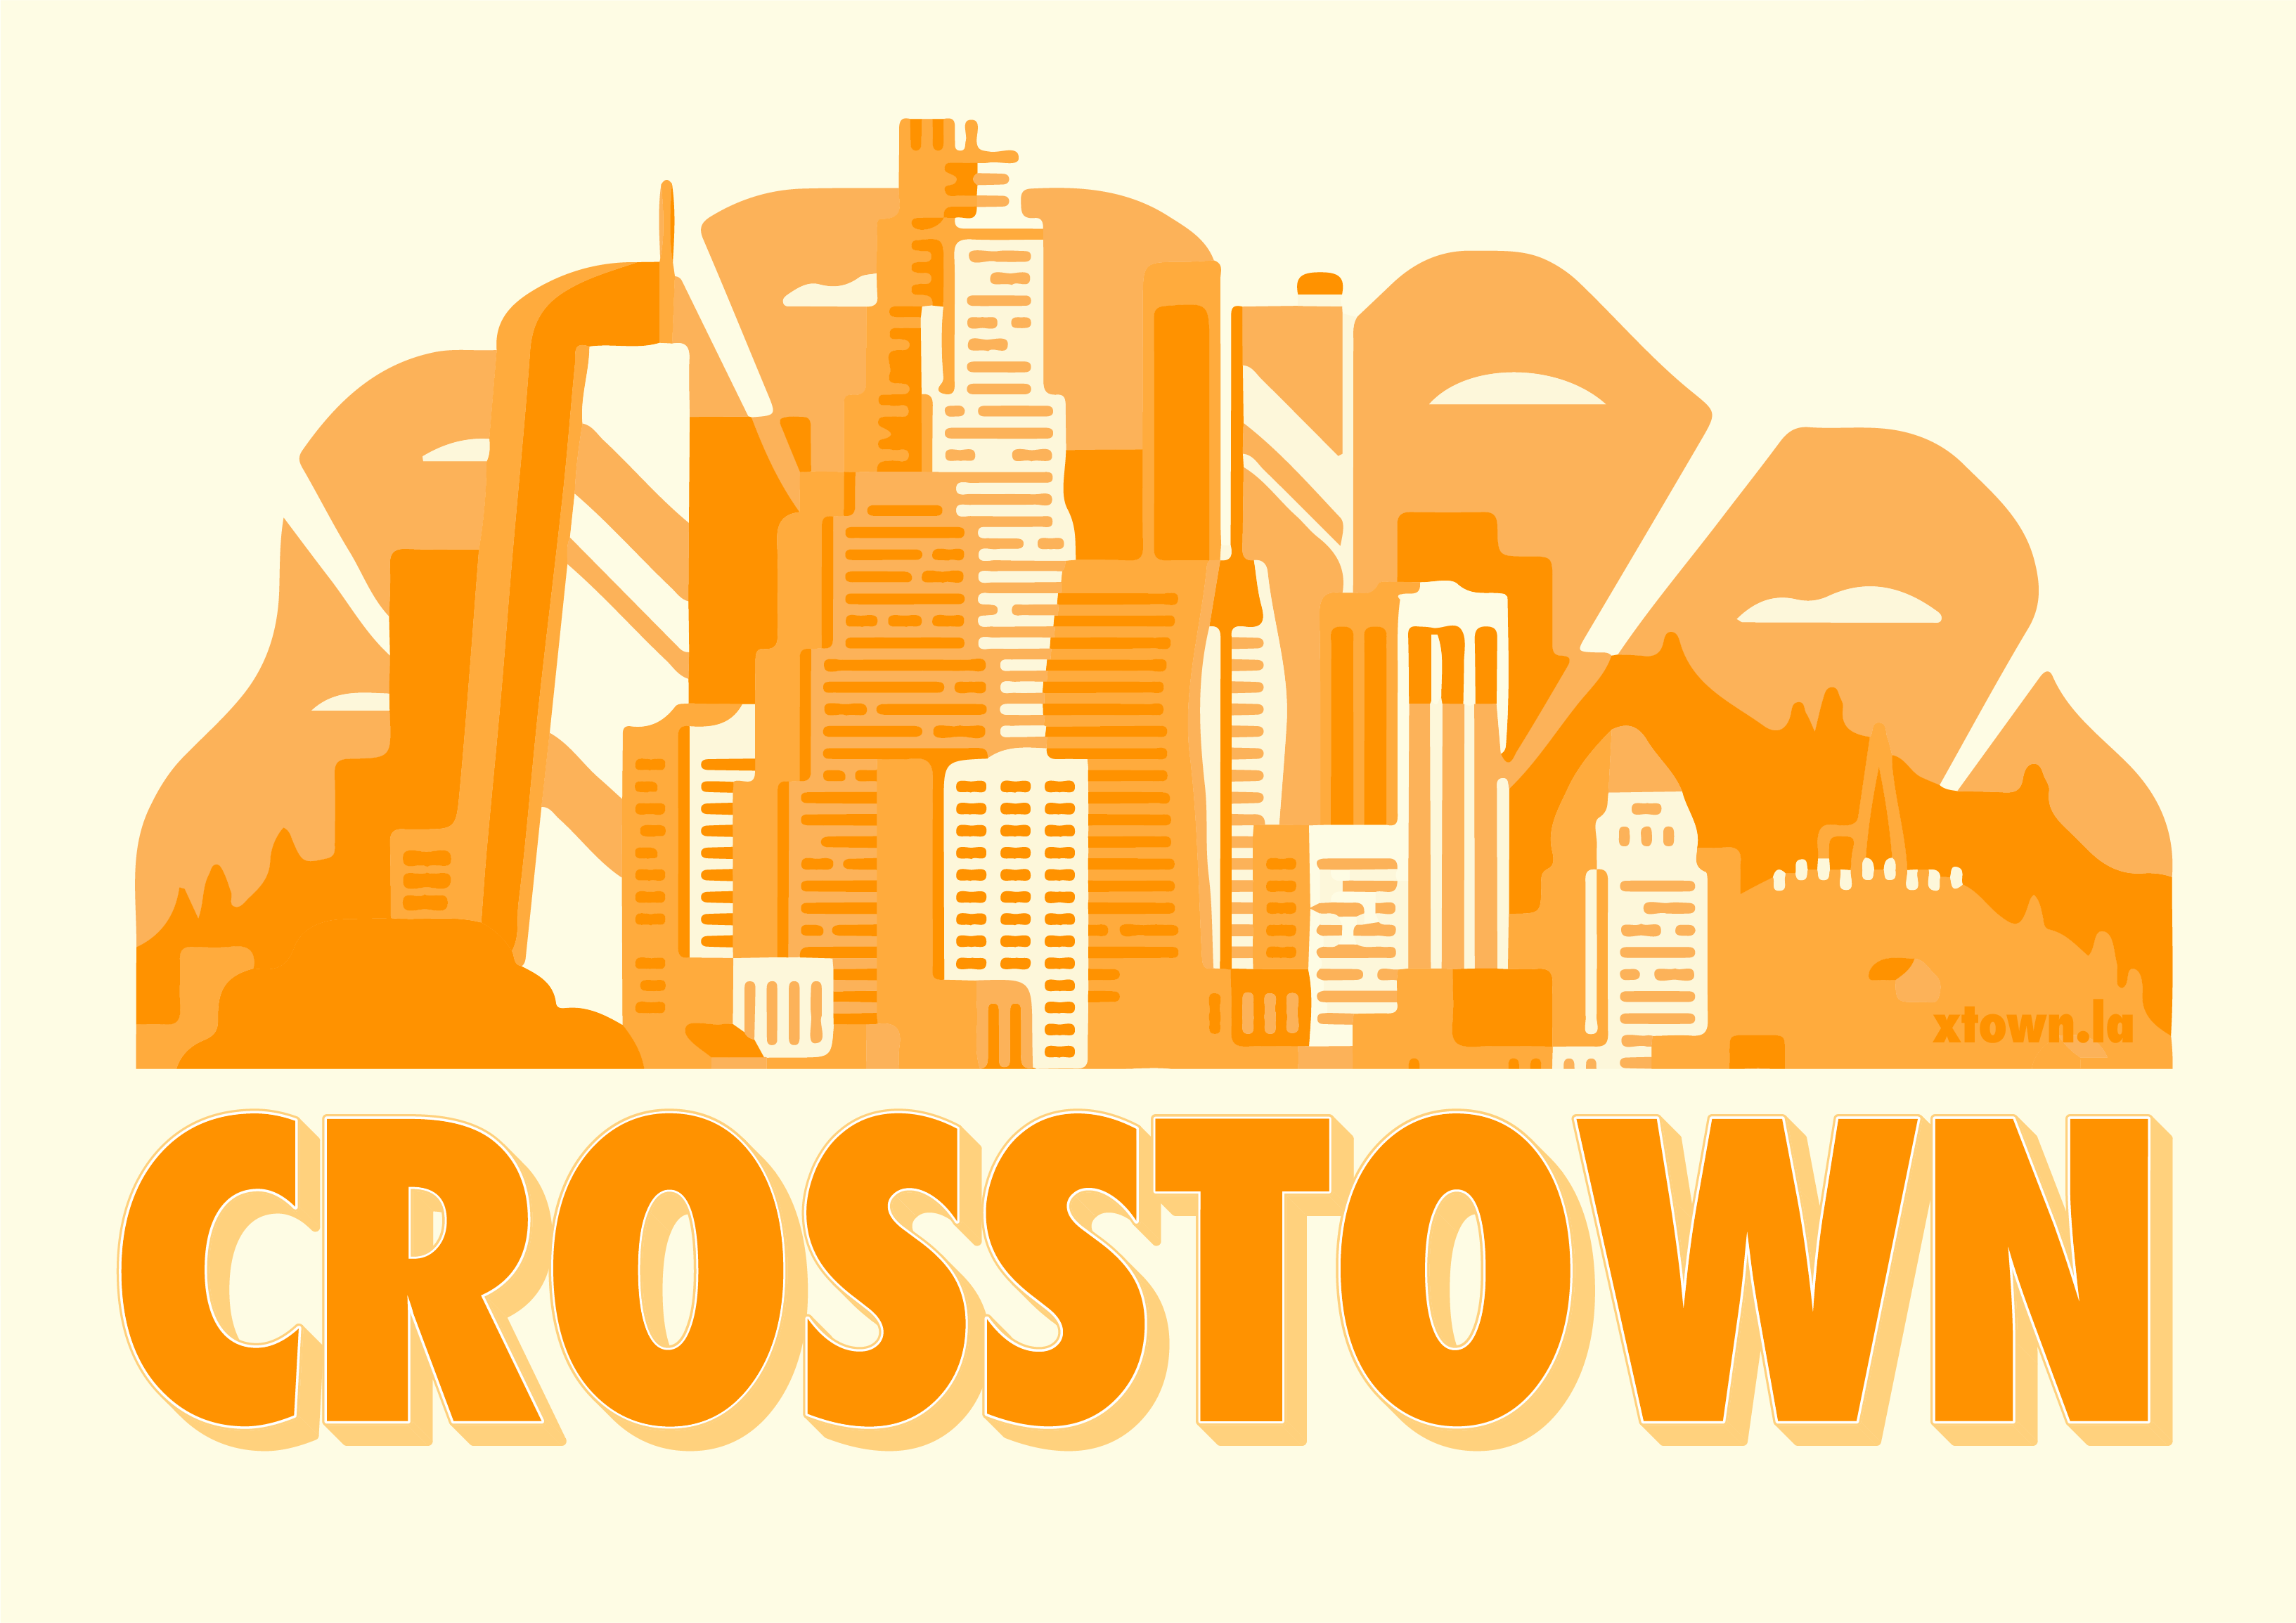 Crosstown newsletter logo